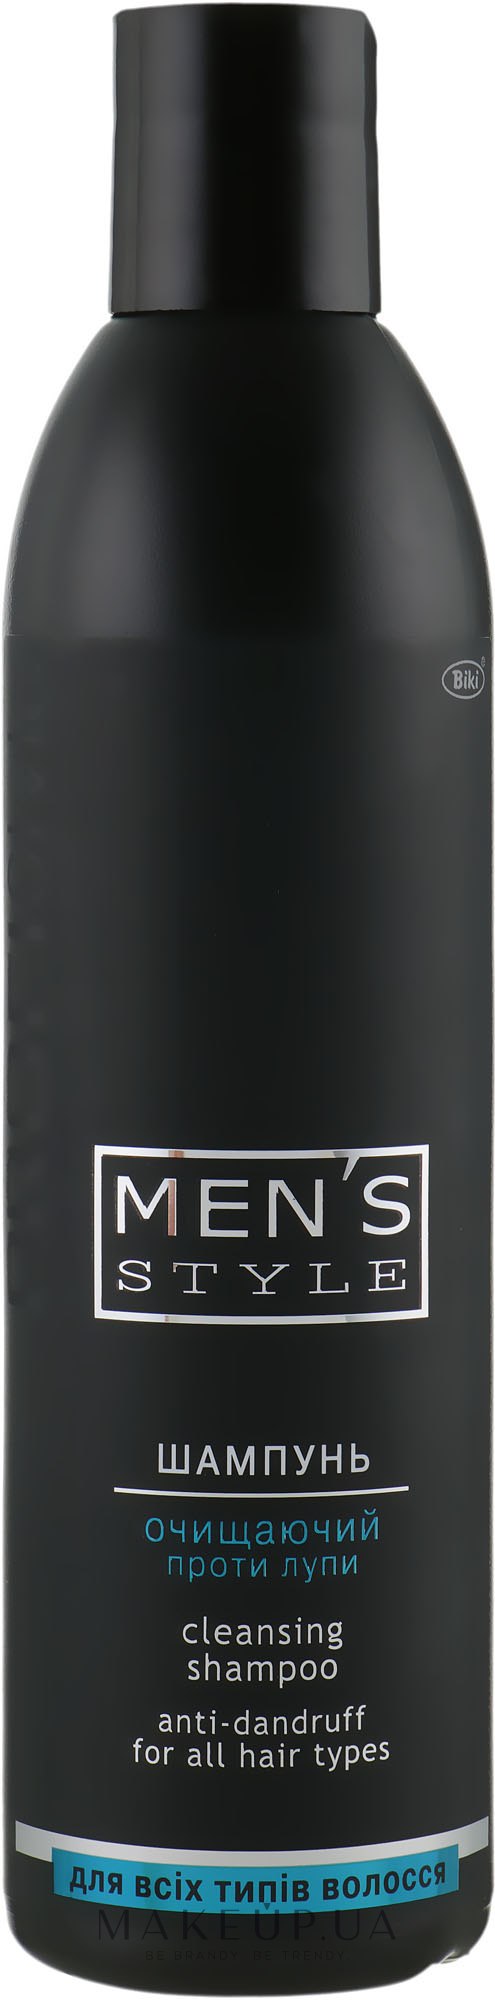 Шампунь очищающий против перхоти для мужчин - Profi Style Men's Style cleaning Shampoo — фото 250ml